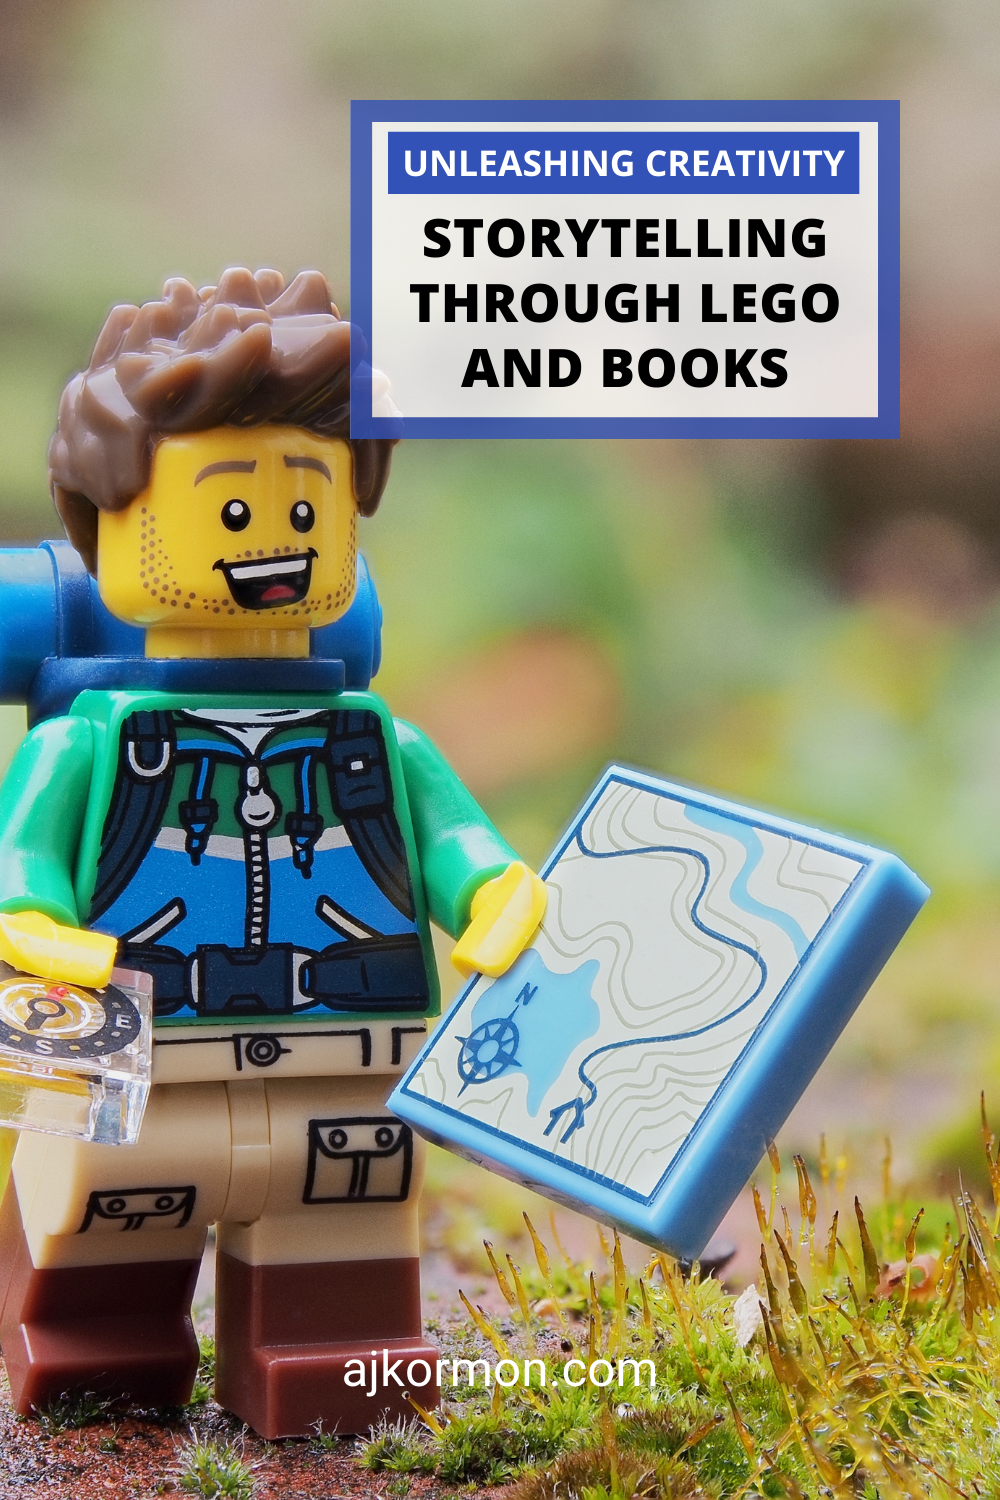 Storytelling Through Lego and Books